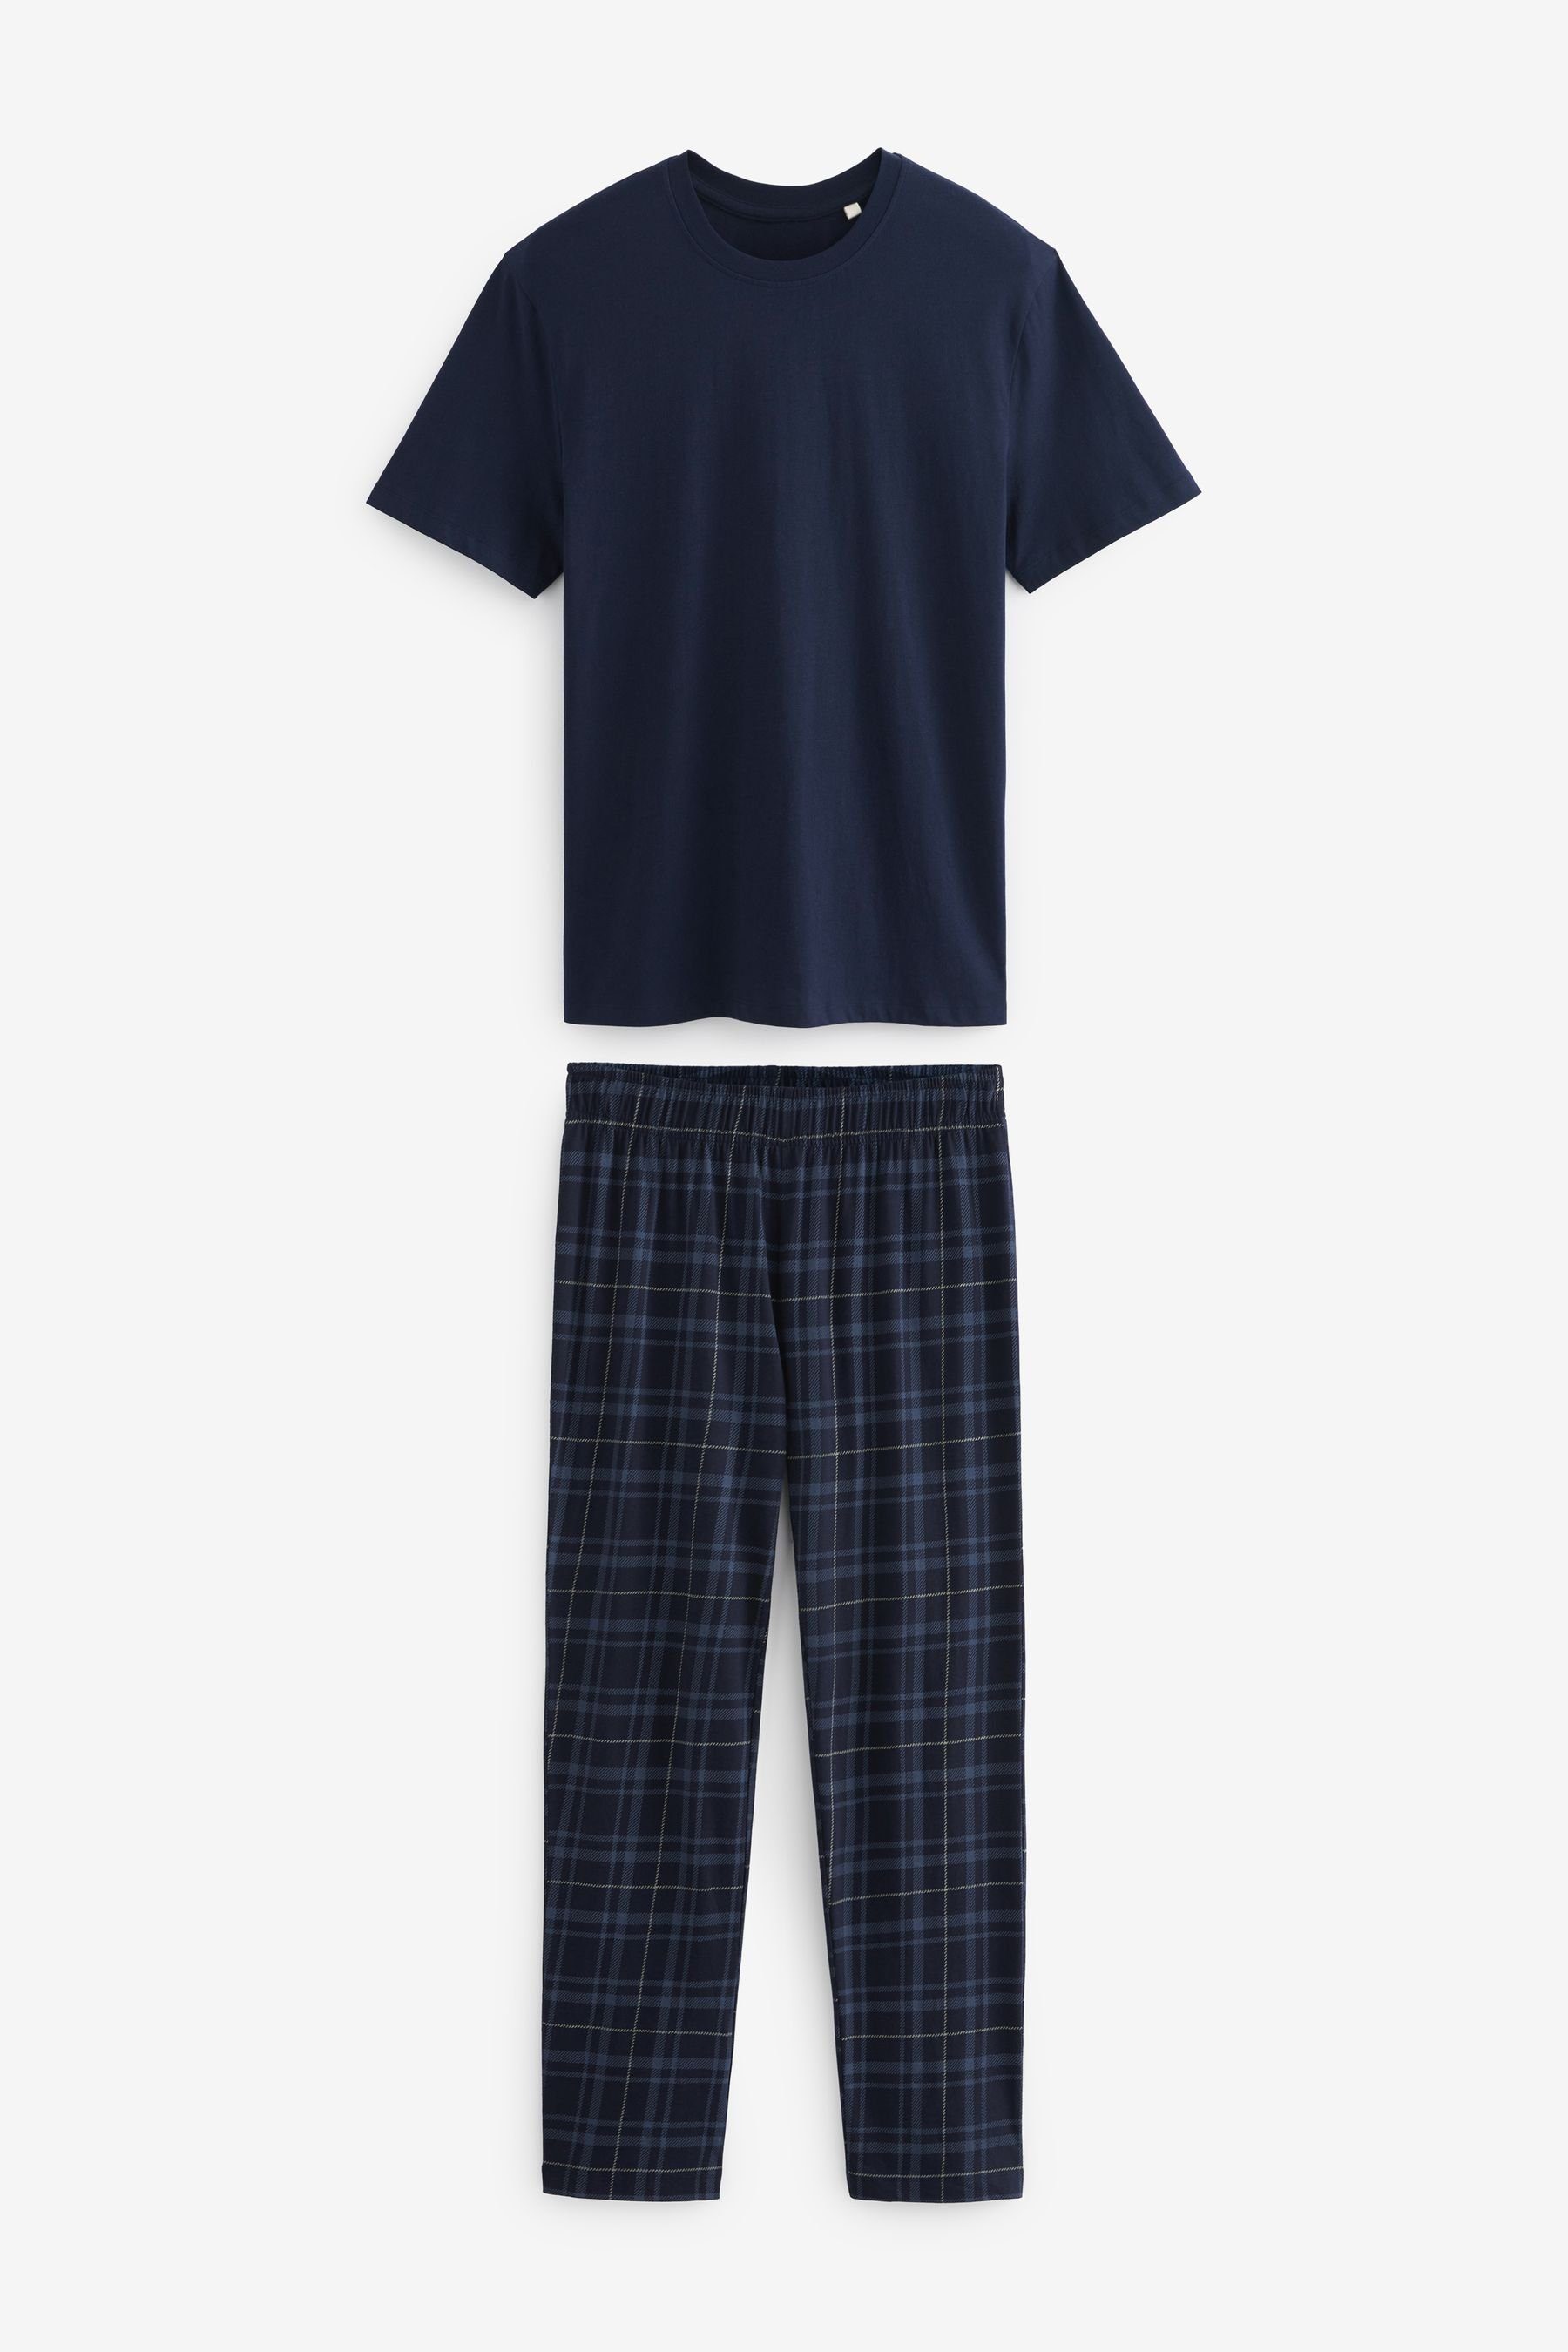 Check Pyjama-Set Next Baumwolle Navy aus Pyjama Blue (2 tlg)